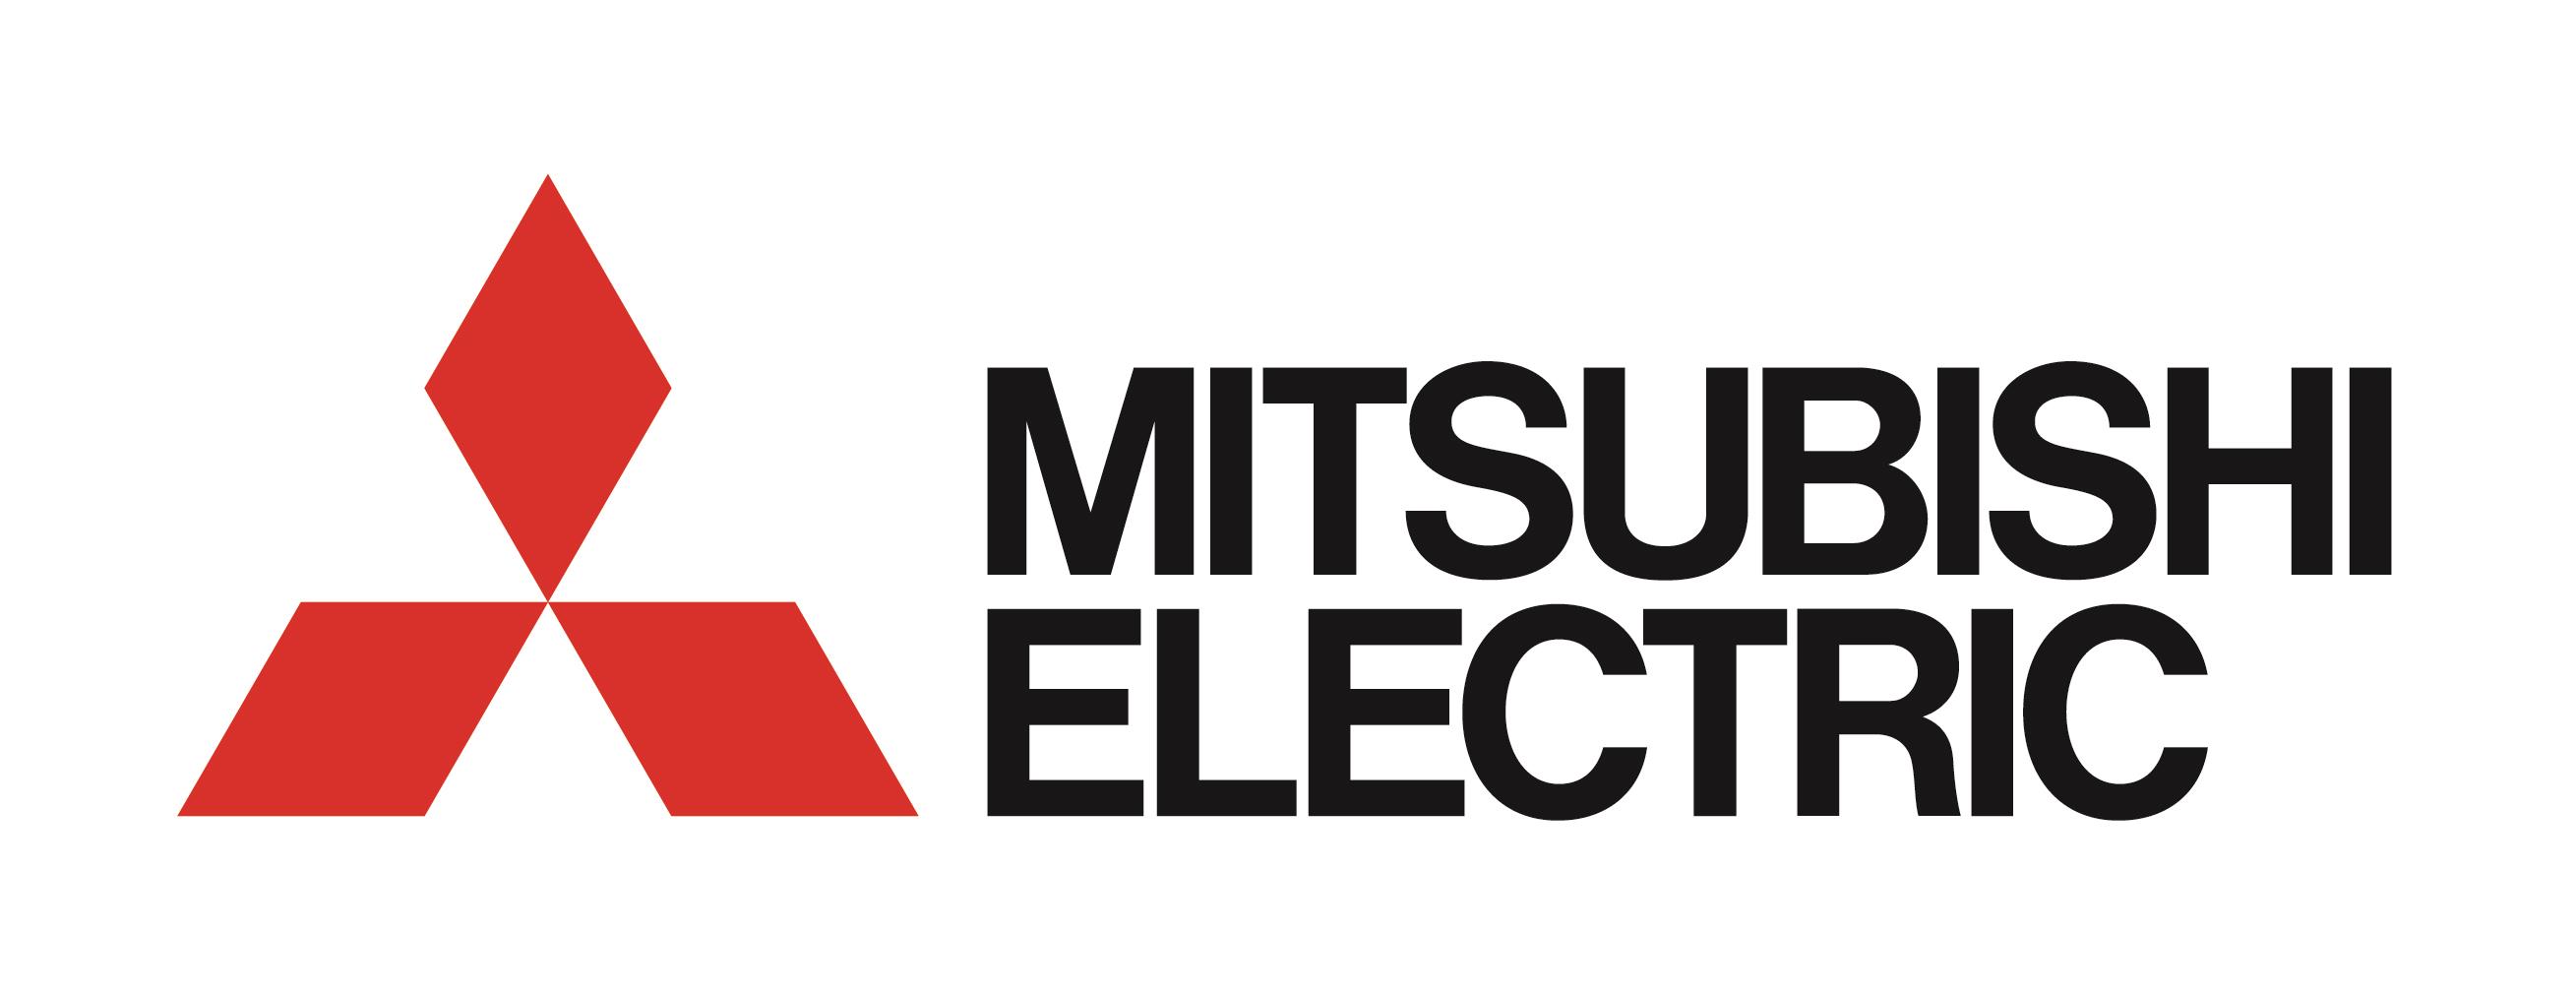 Mitsubishi Electric Logo-Partner Use-300dpi (2).jpg